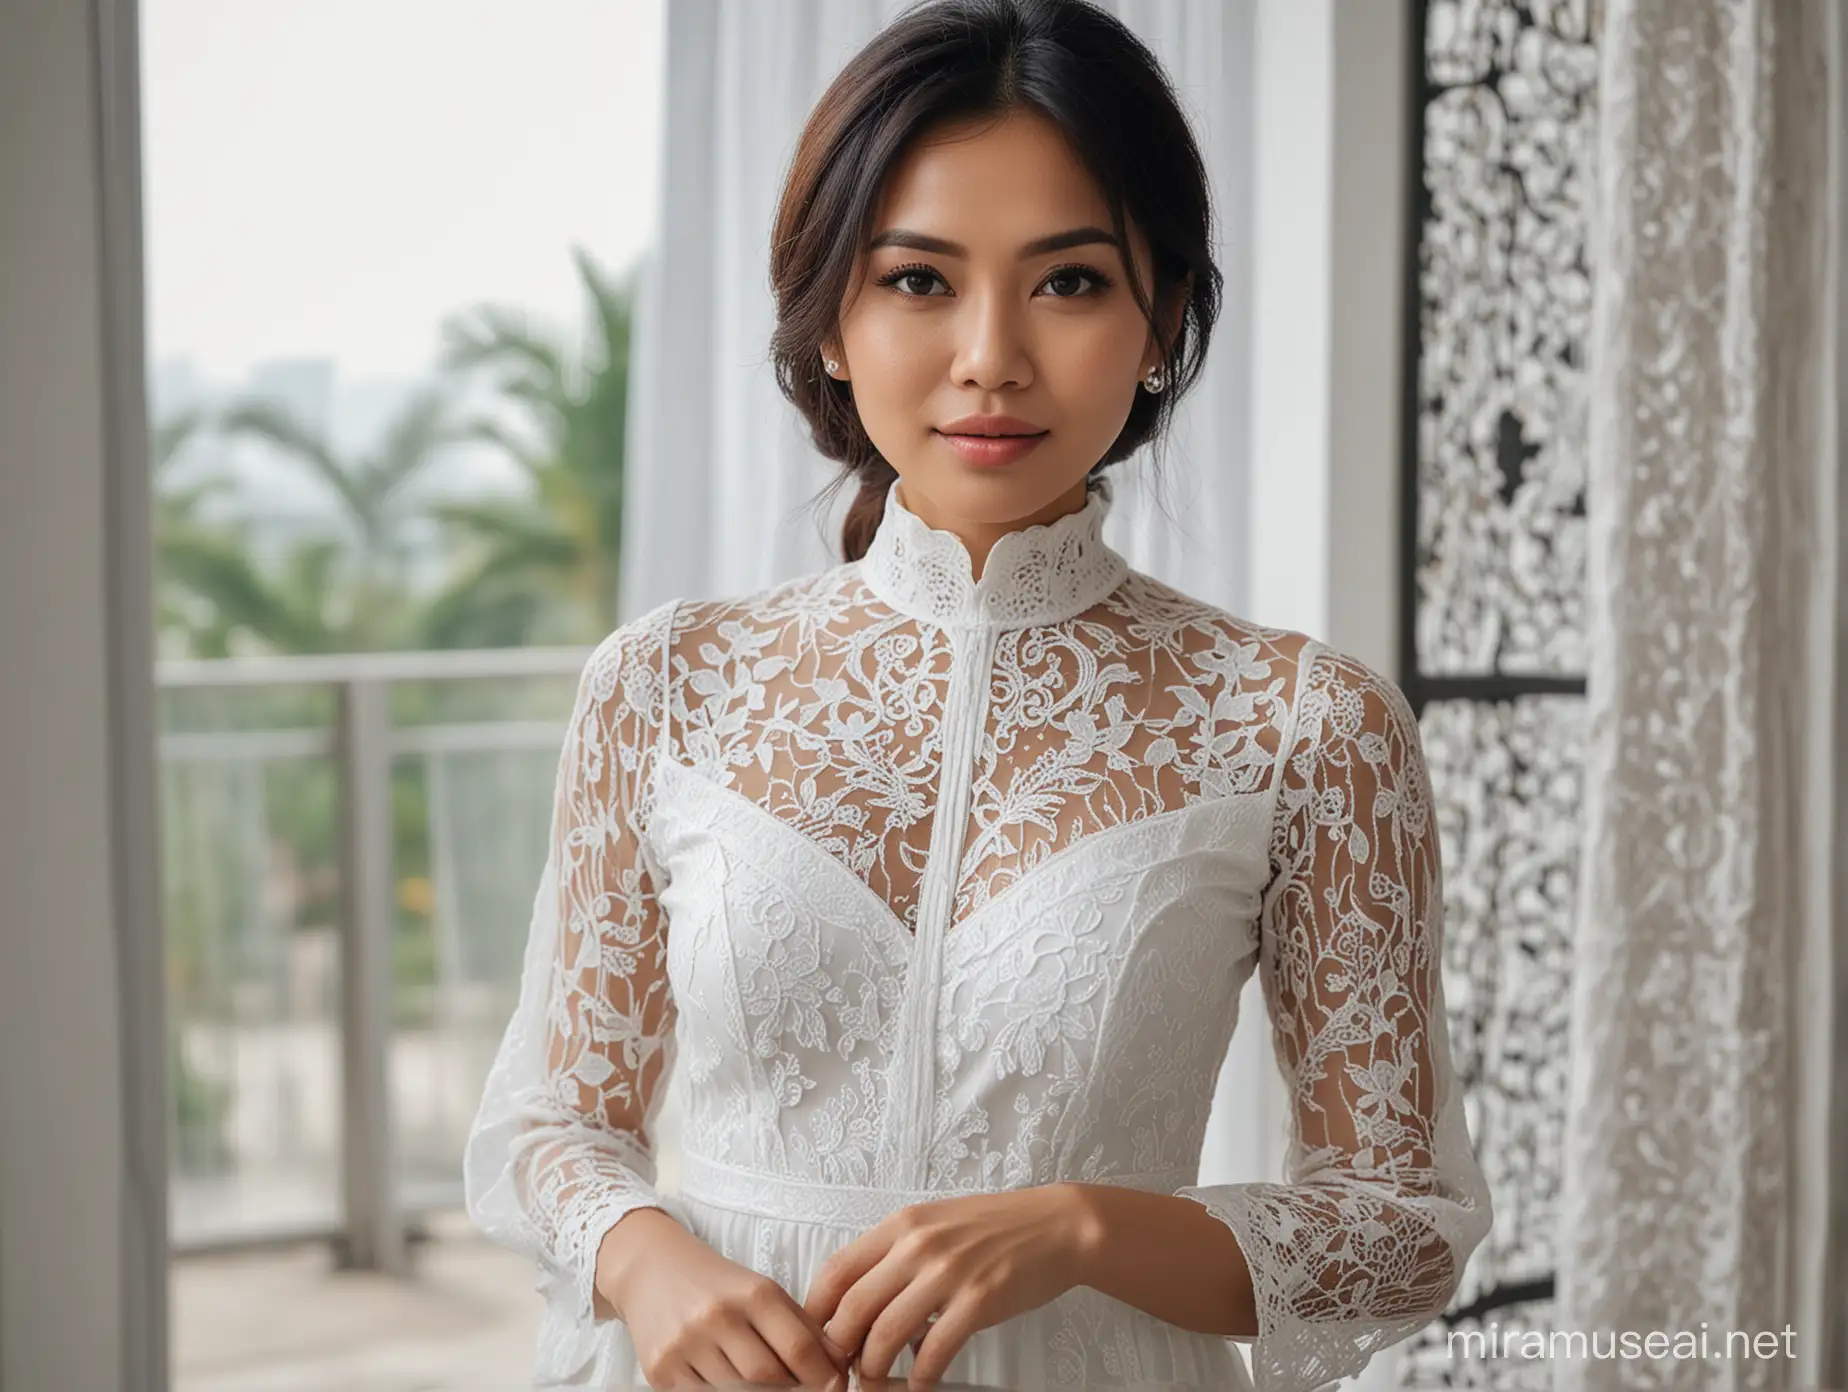 Elegant Surabaya Woman in Sheer Lace Dress